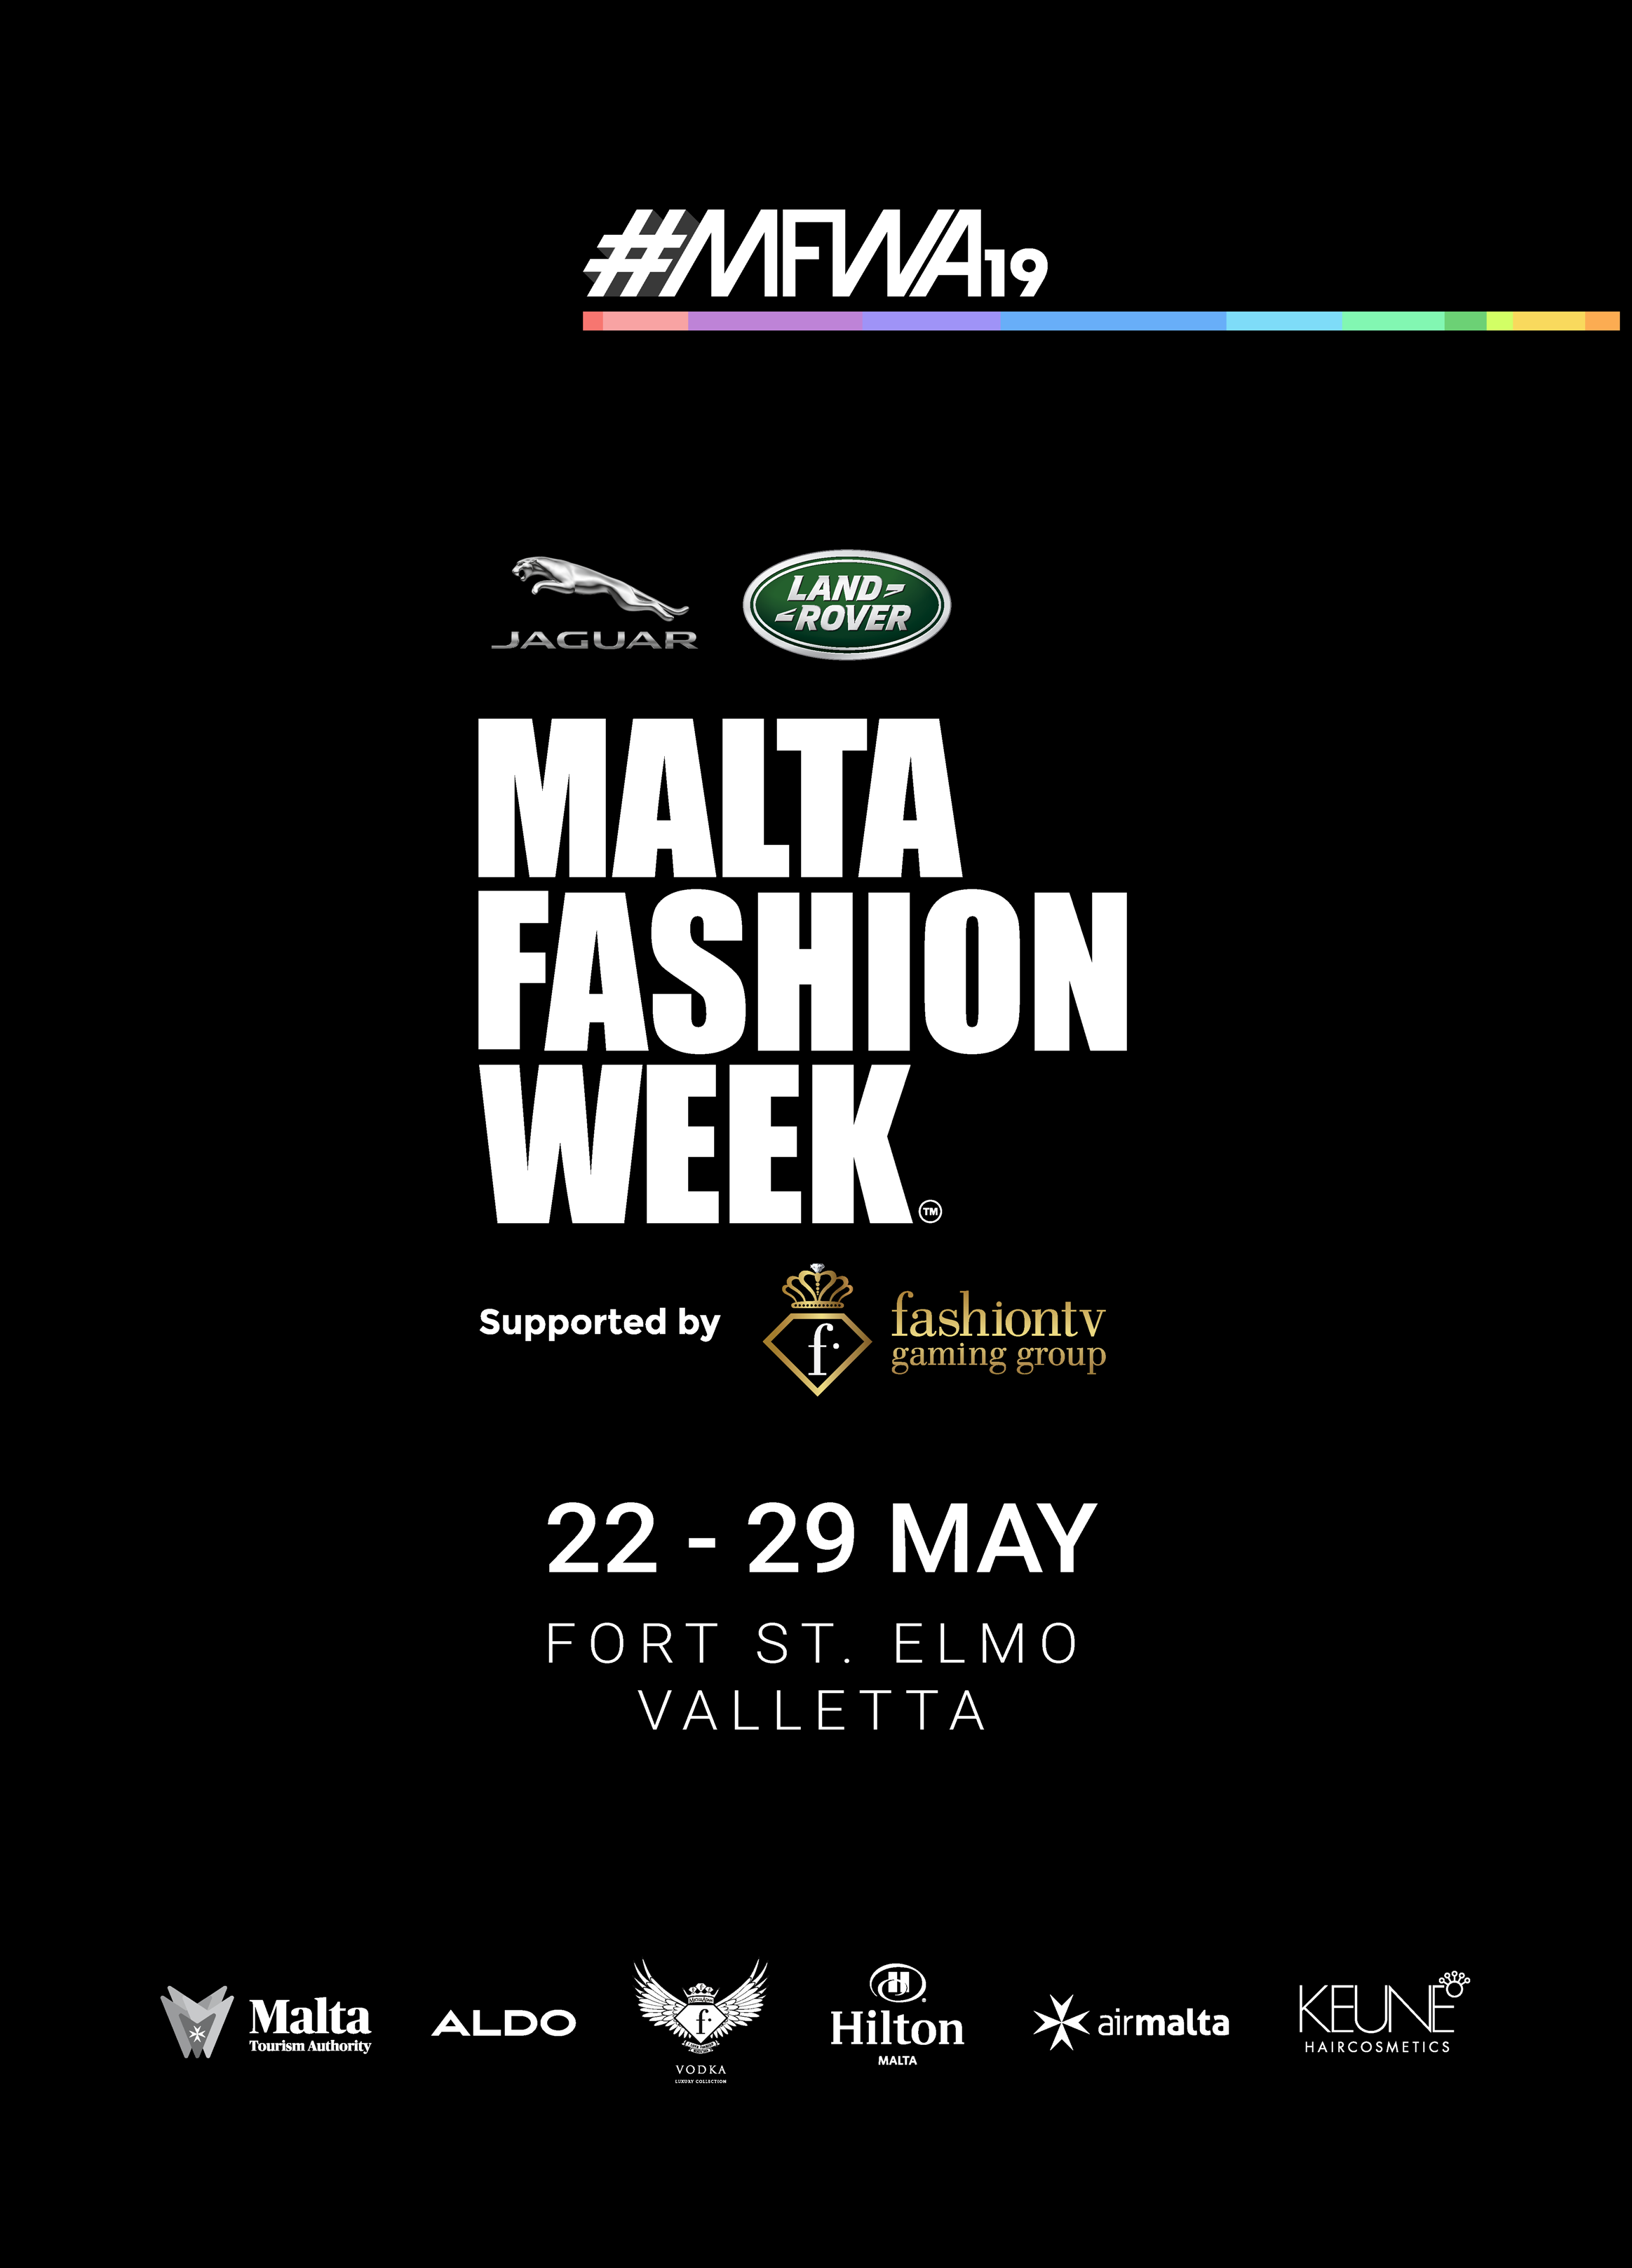 Malta Fashion Week 2019 poster